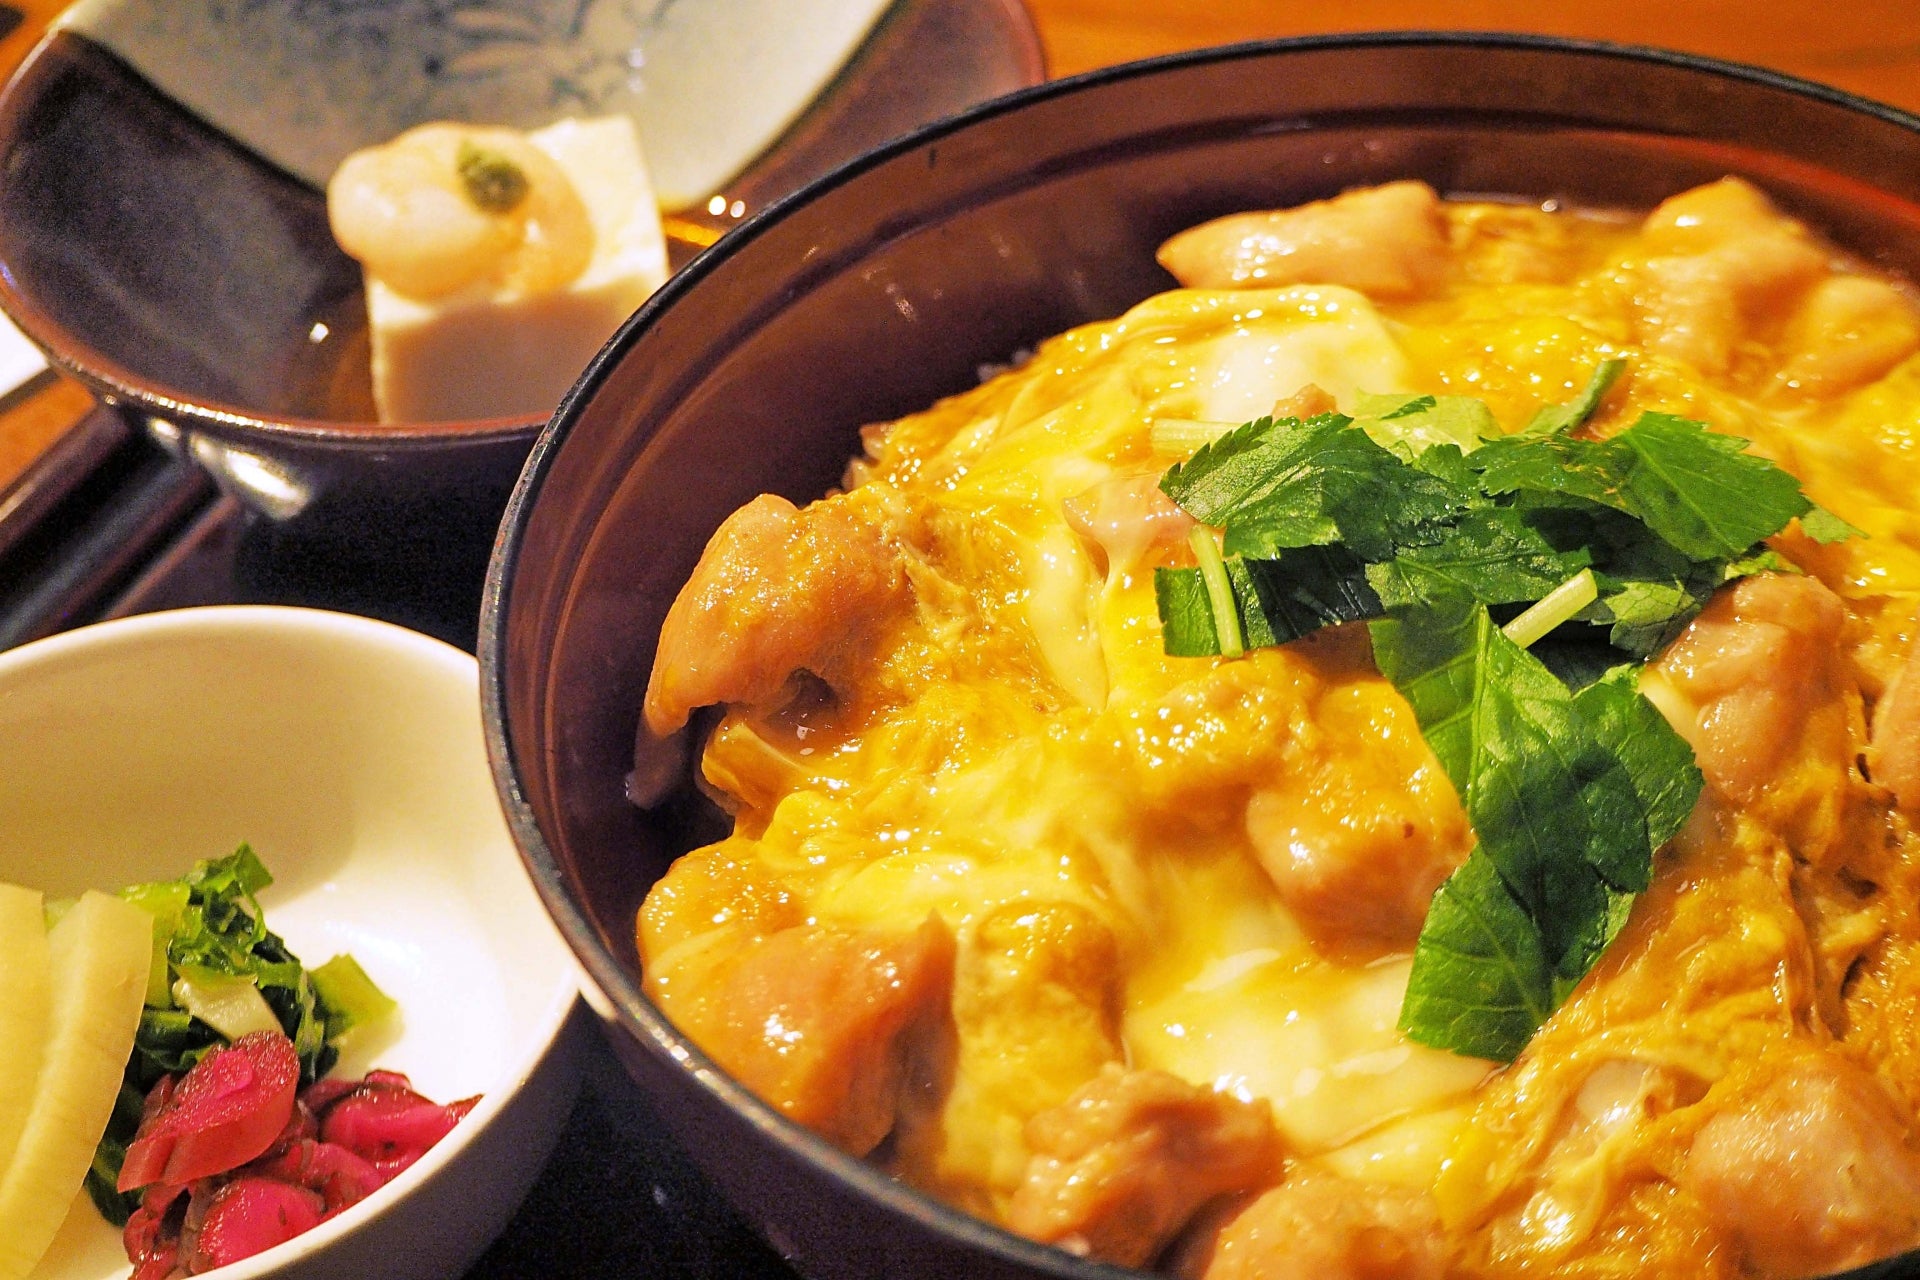 RECIPE: Oyakodon (Chicken and Egg Bowl)